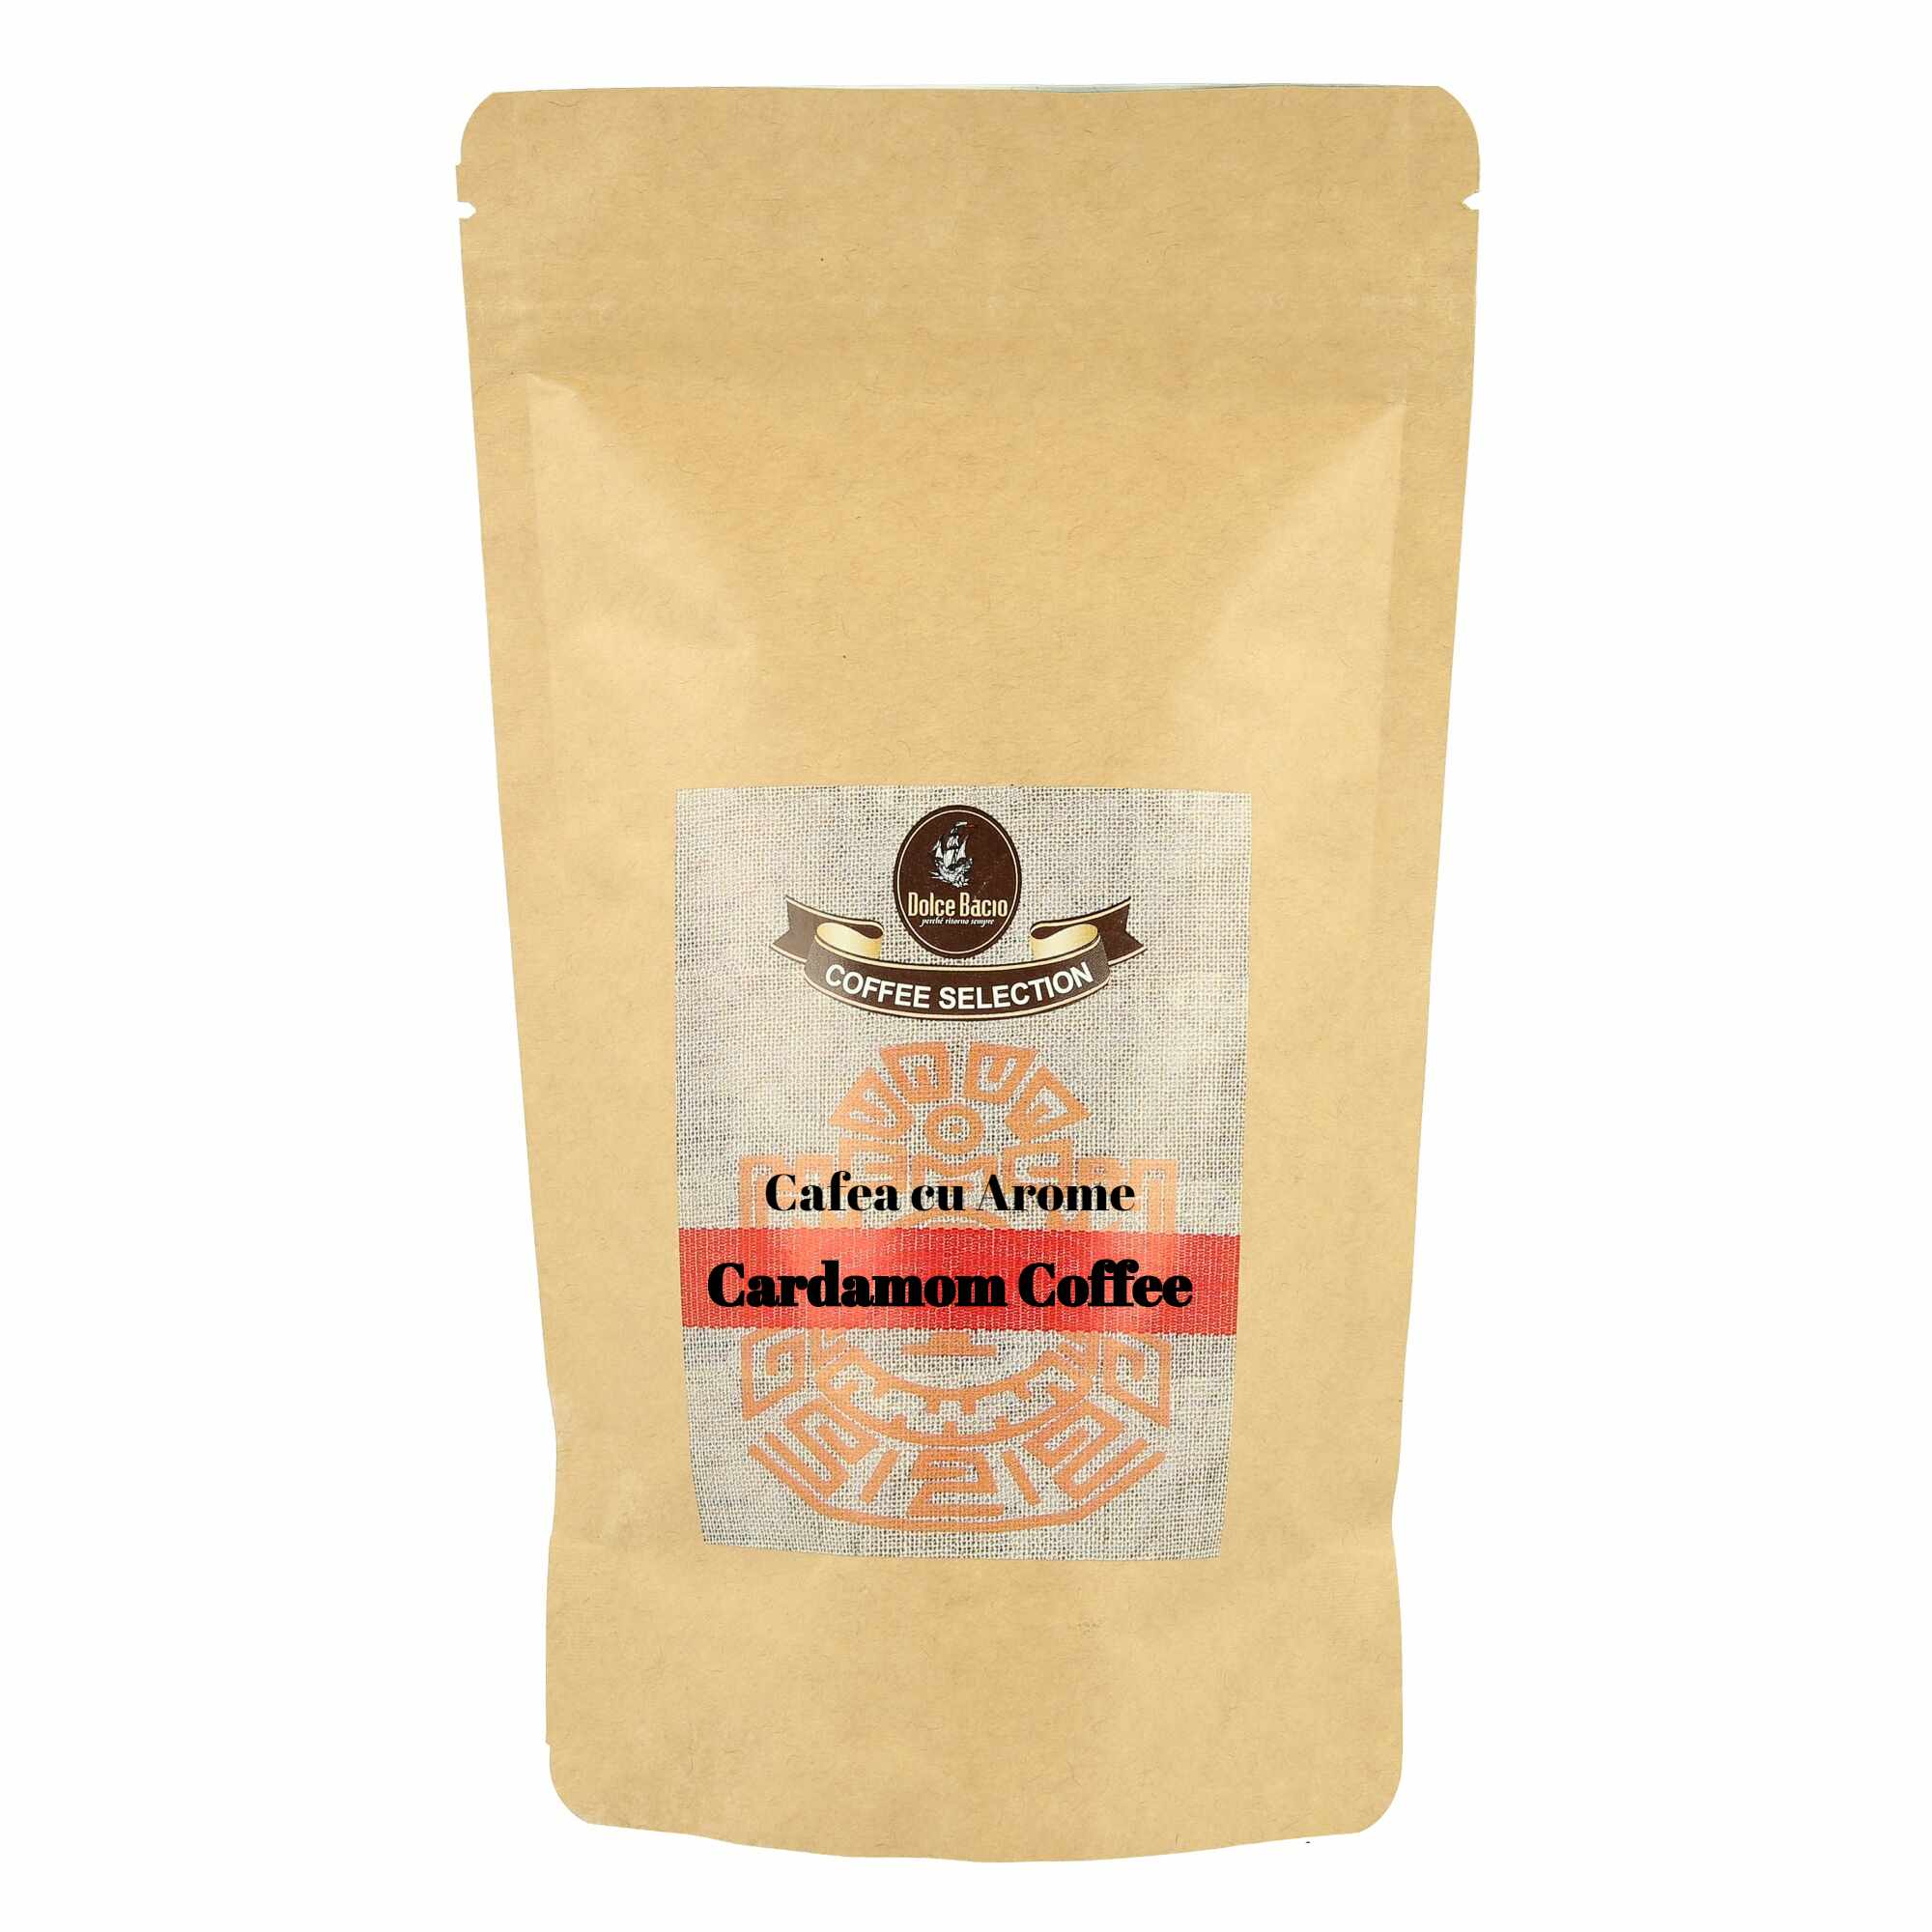 Cardamom Coffee 100g french press